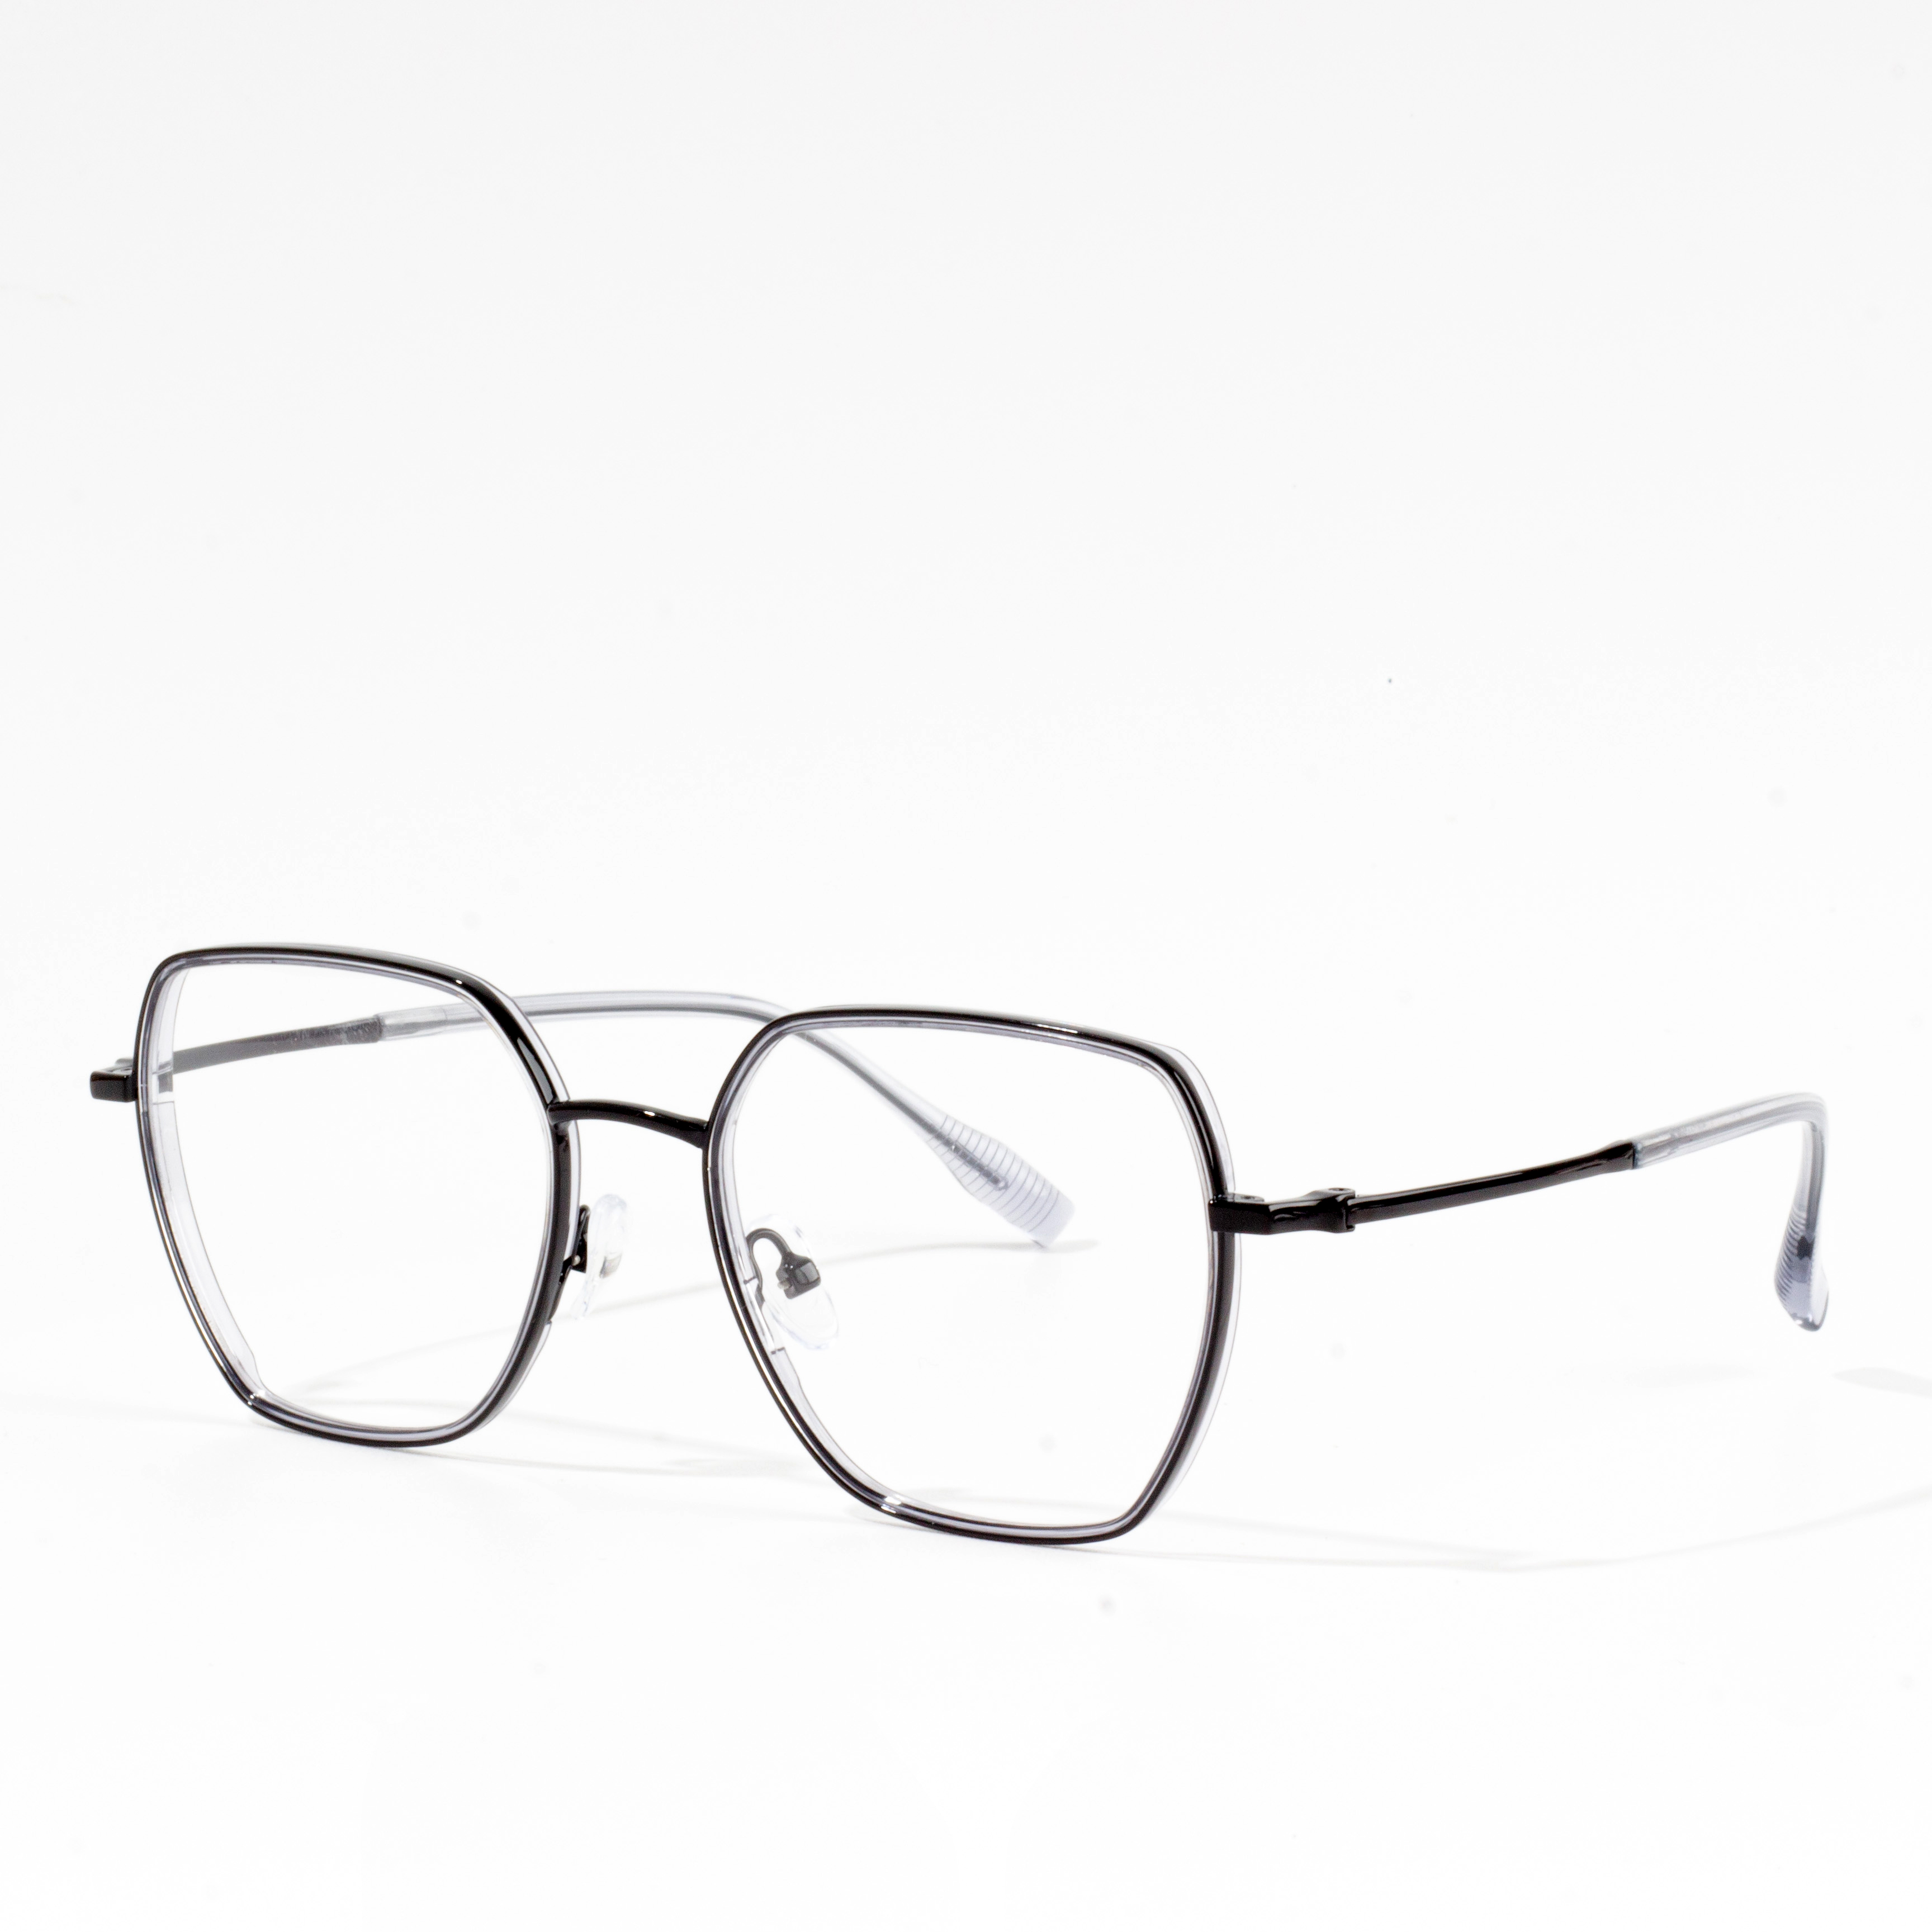 thin lightweight metal eyeglasses